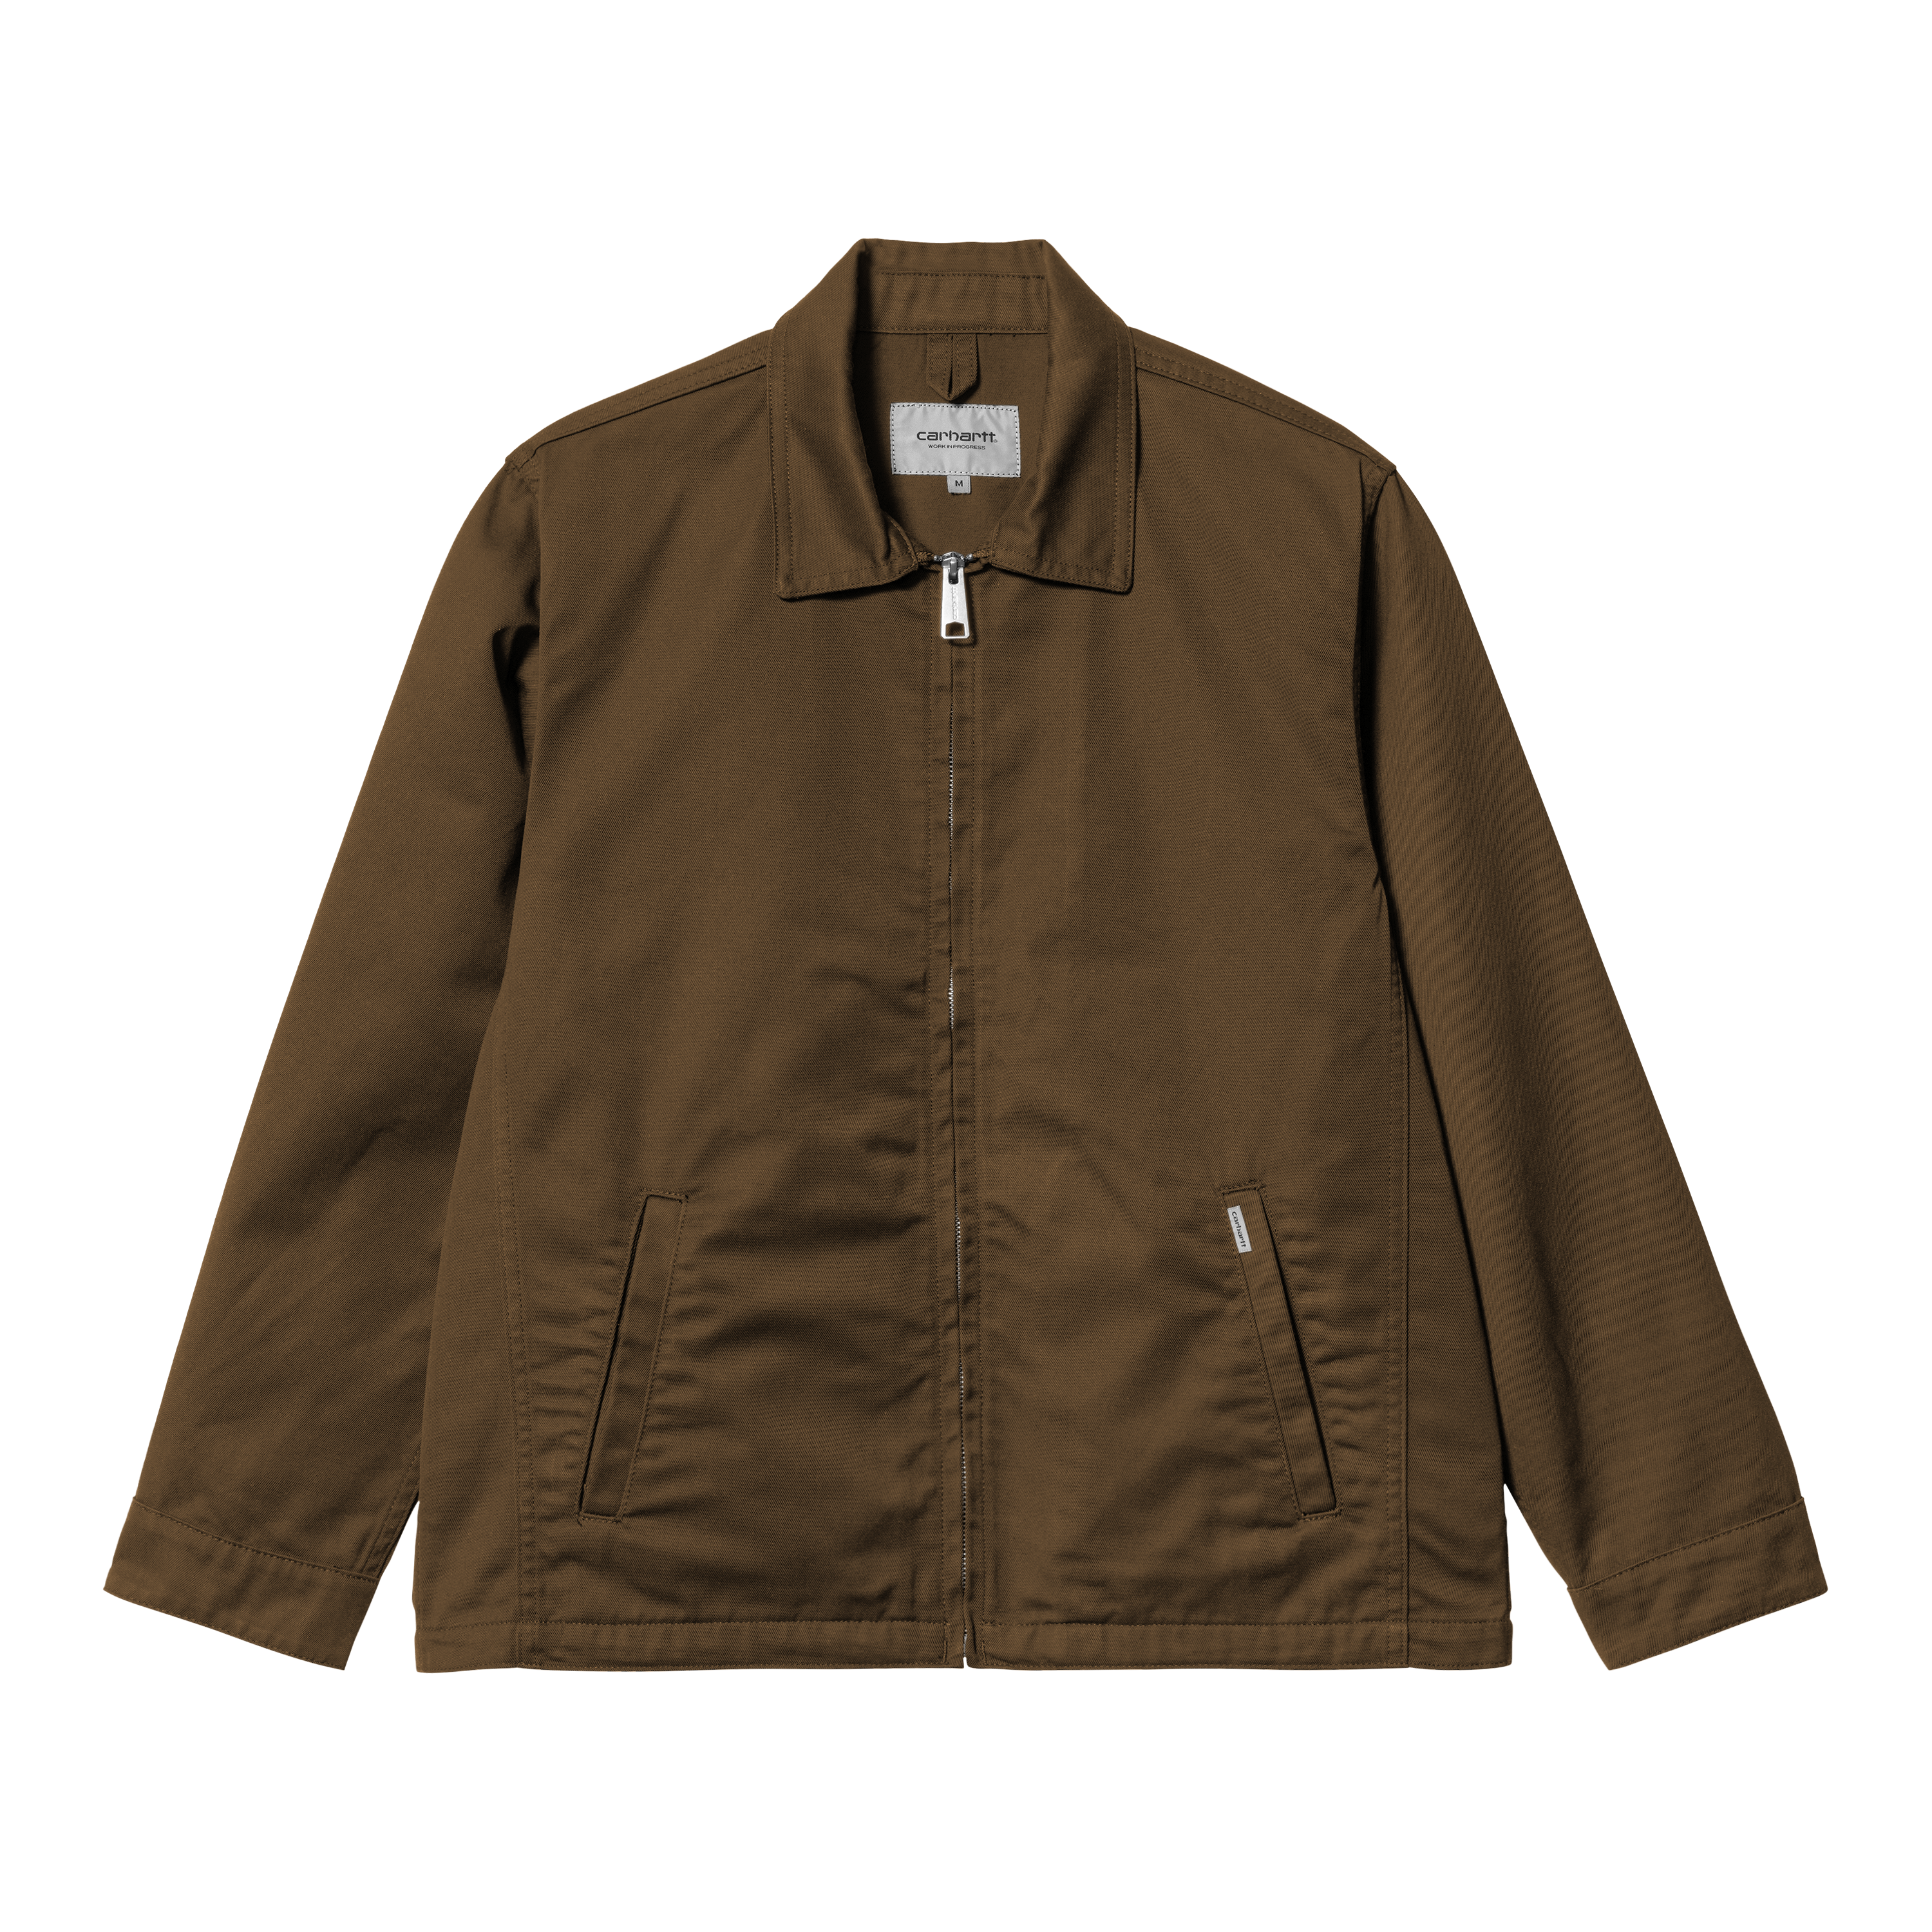 Carhartt WIP Modular Jacket in Brown